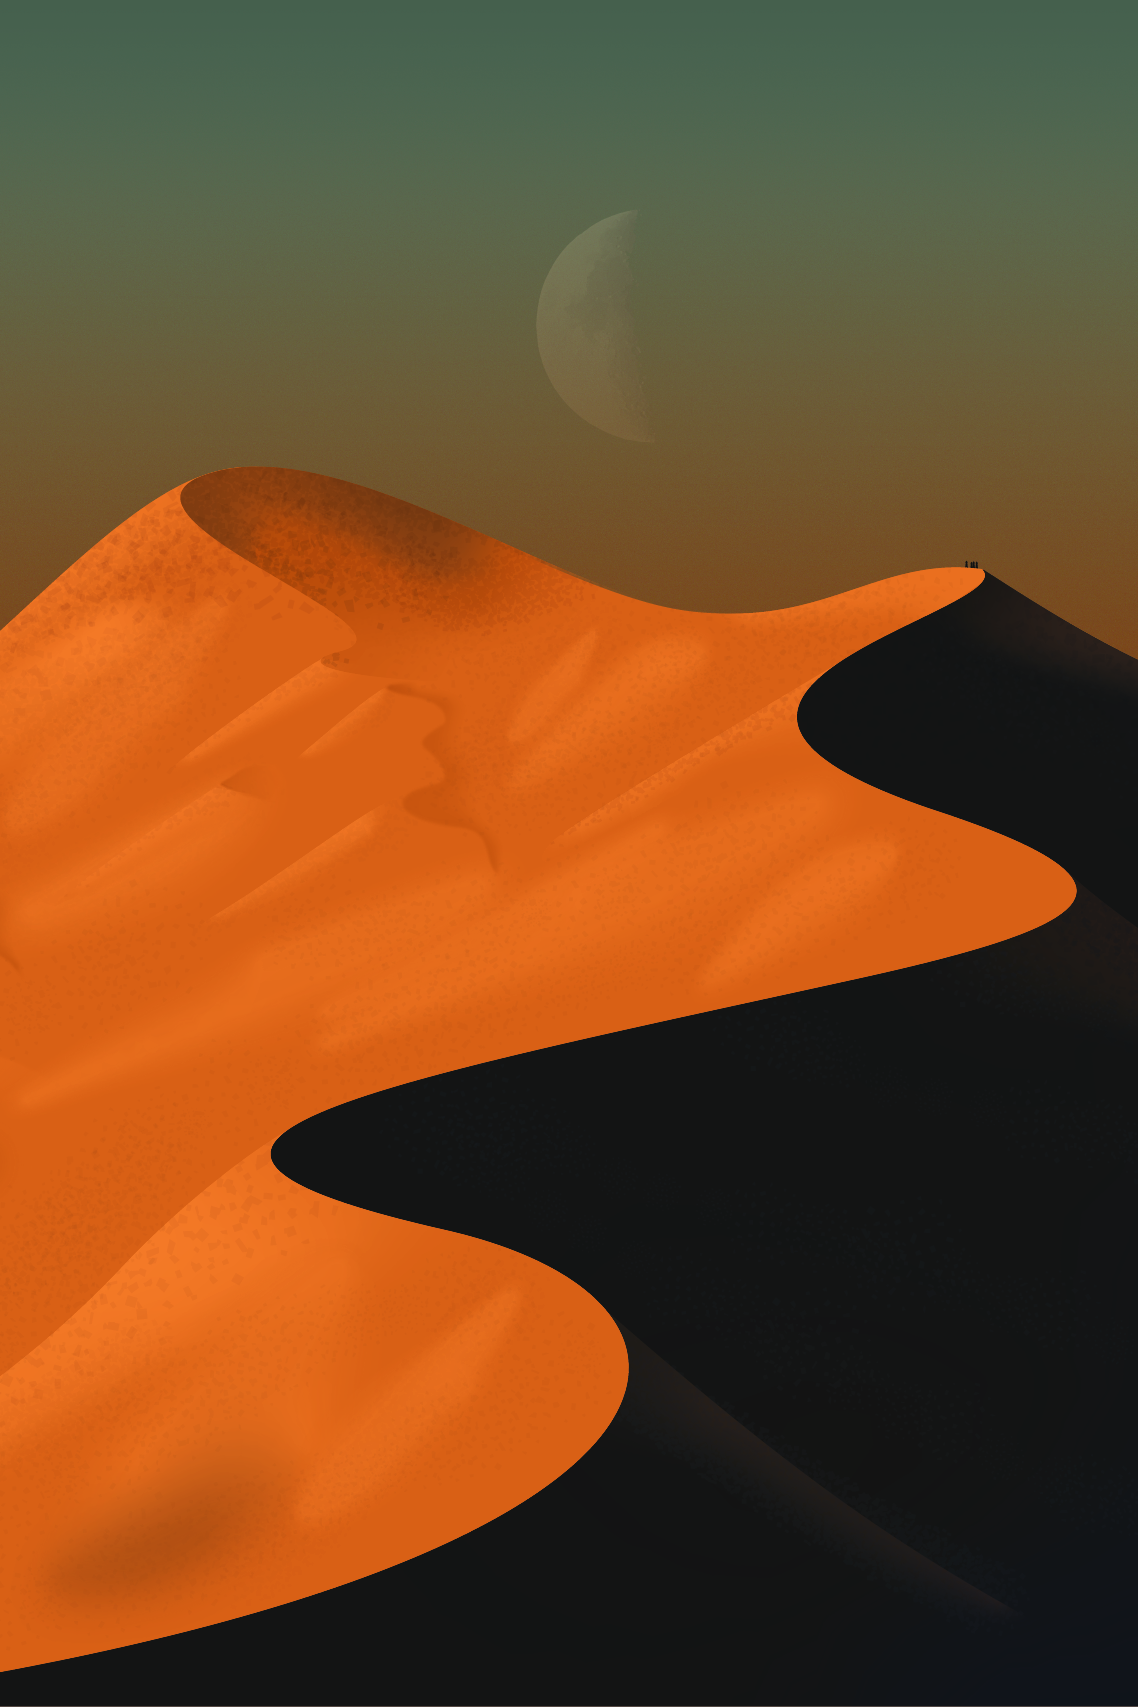 Abstract desert illustration by Xavier Wendling